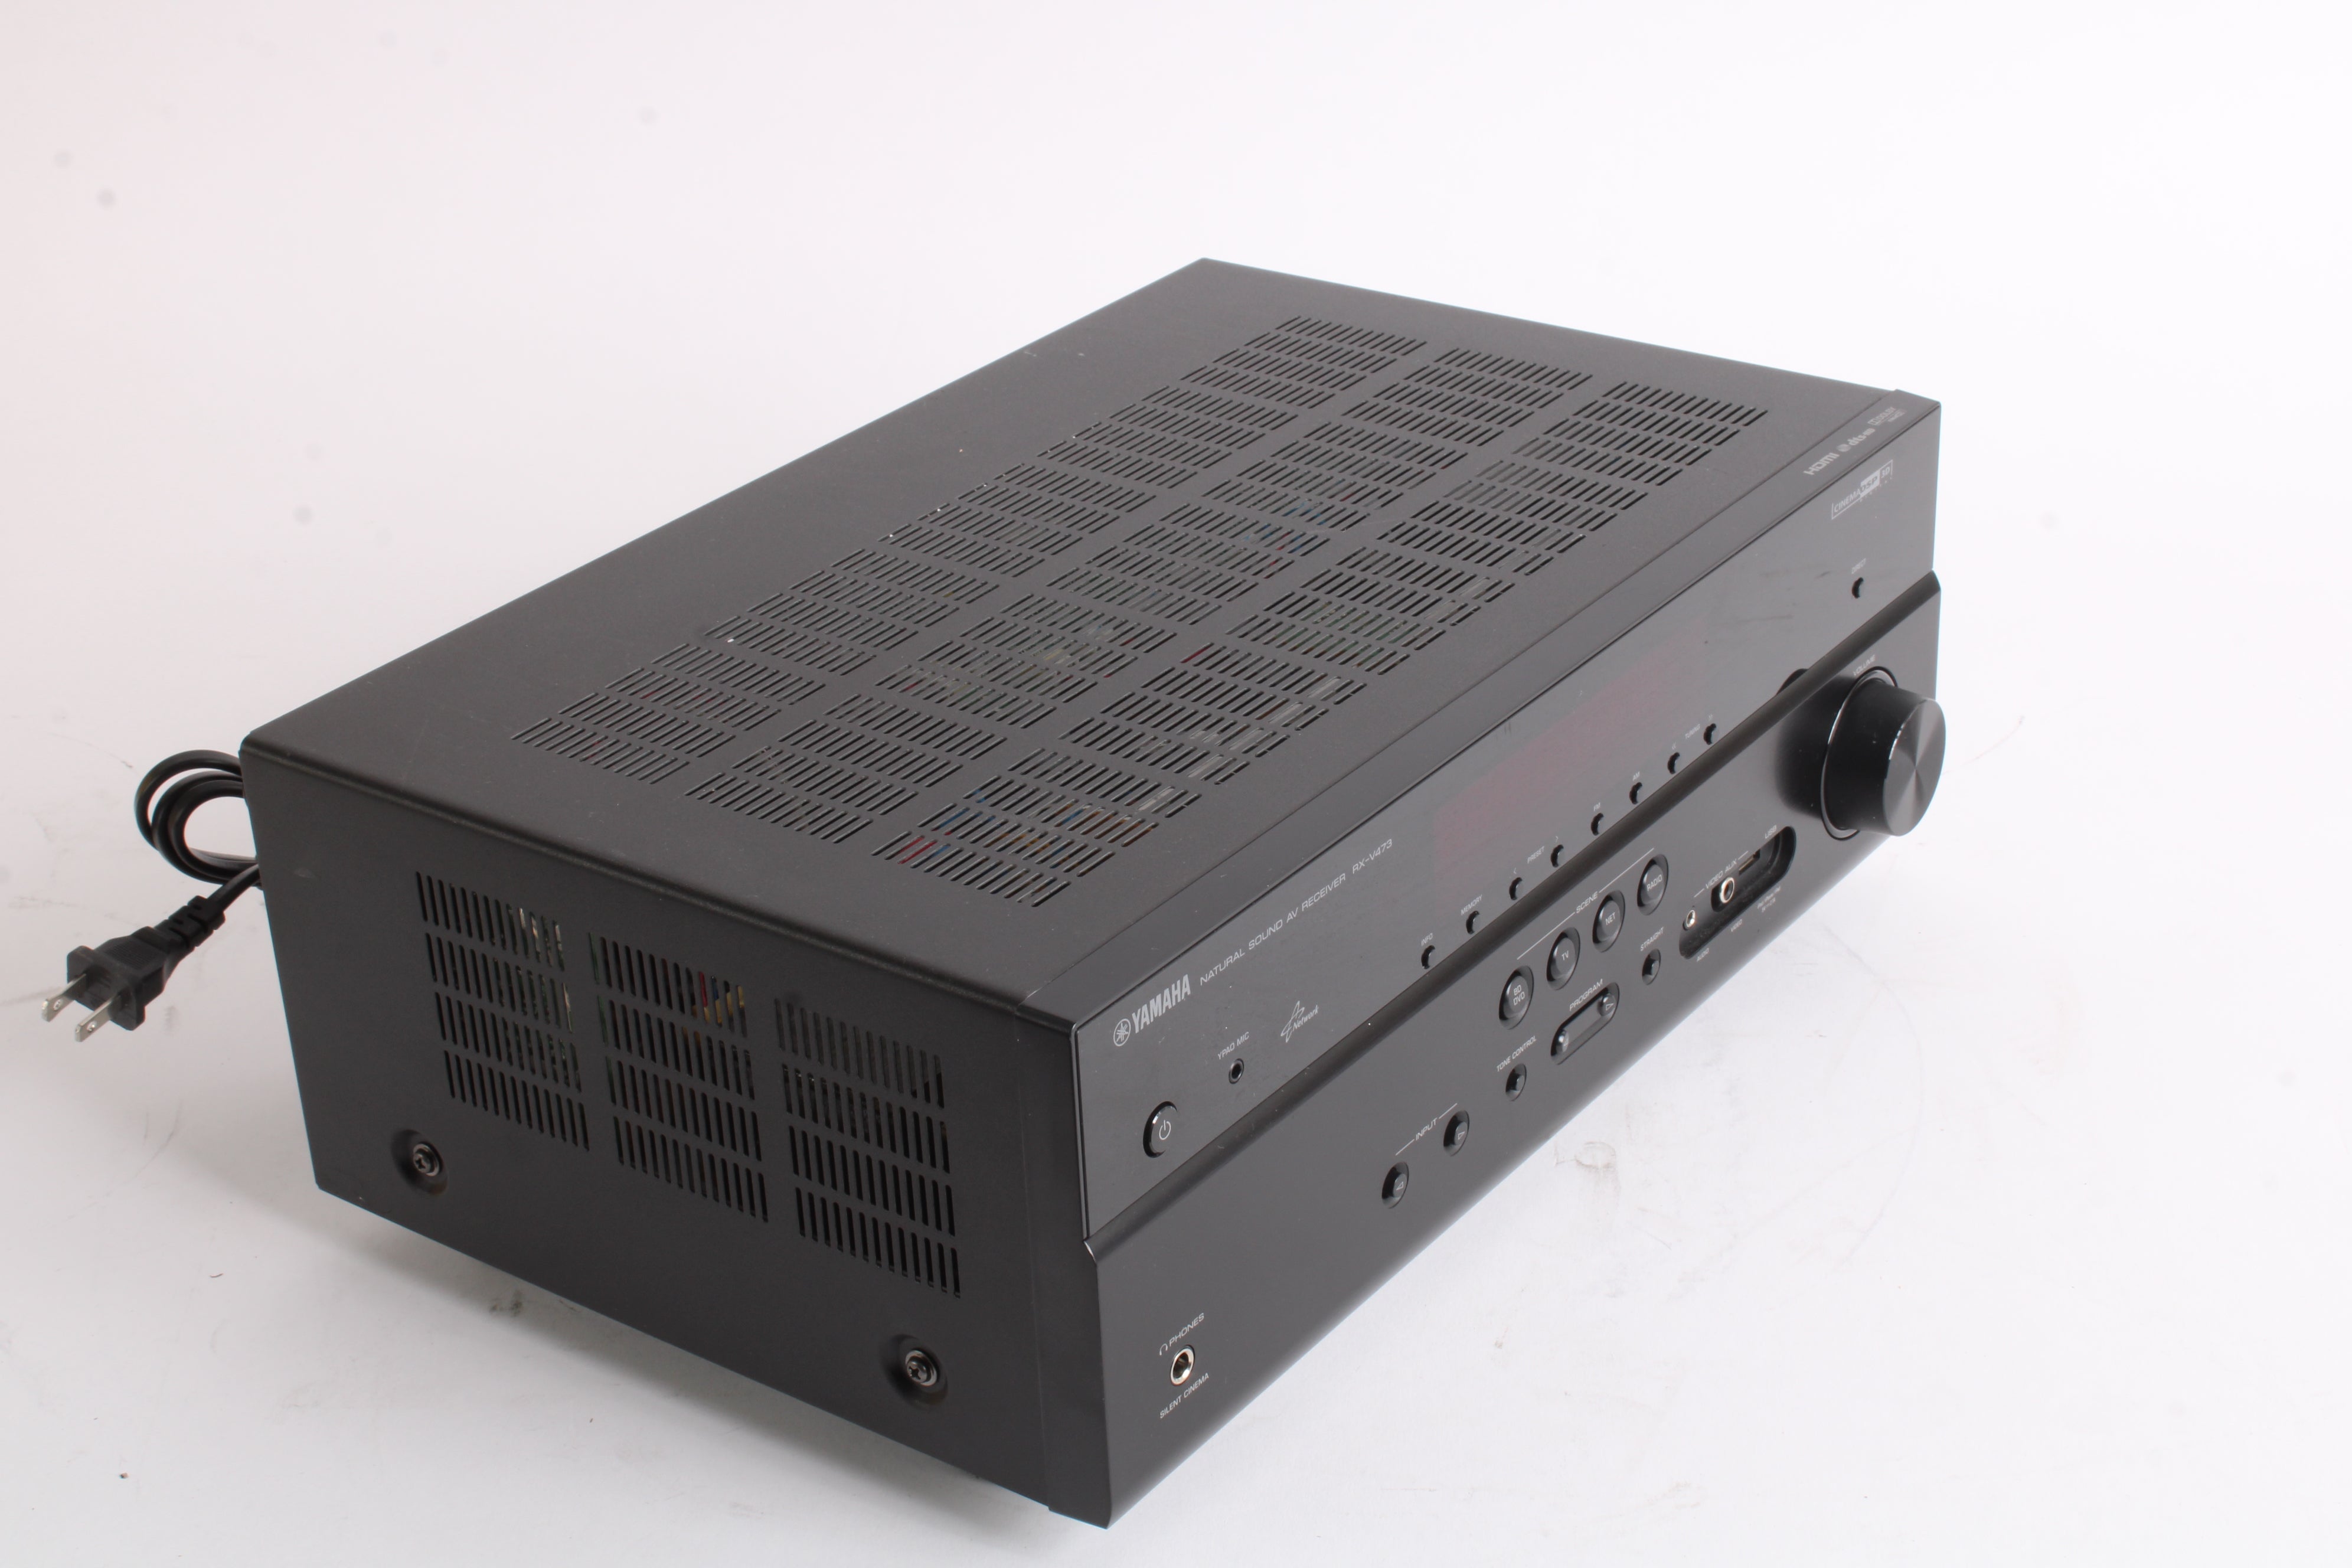 Yamaha RX-V473 5.1-Channel AV Receiver / Home Theater